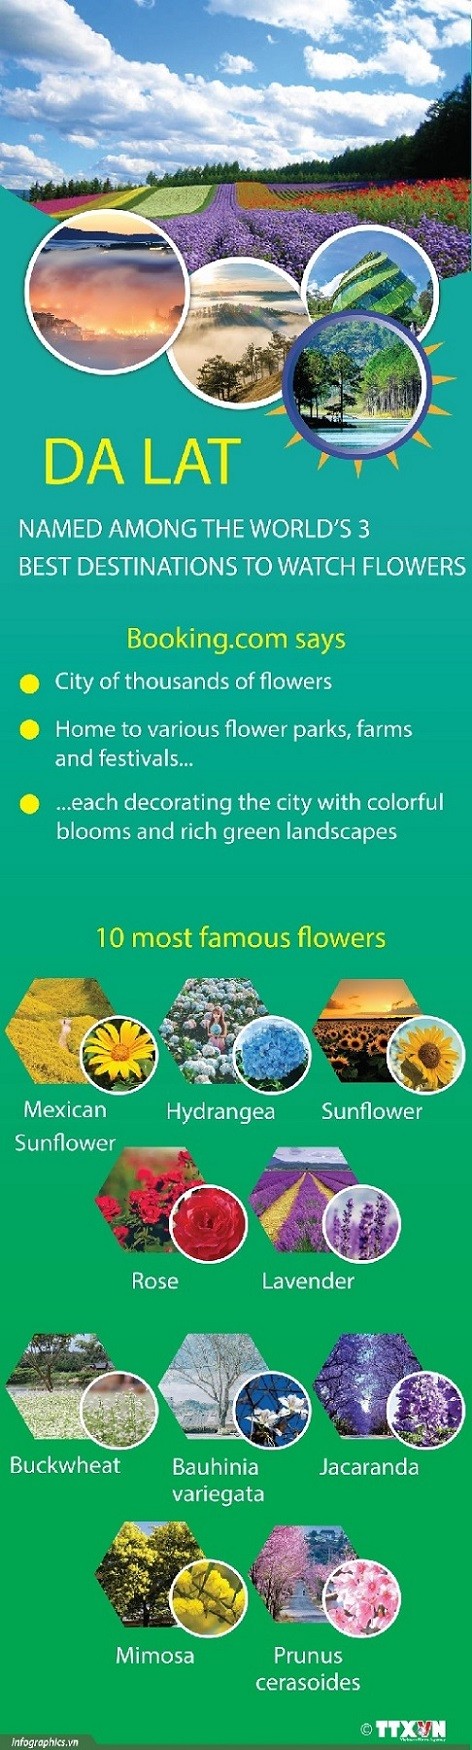 Da Lat among world's top destinations for flowers